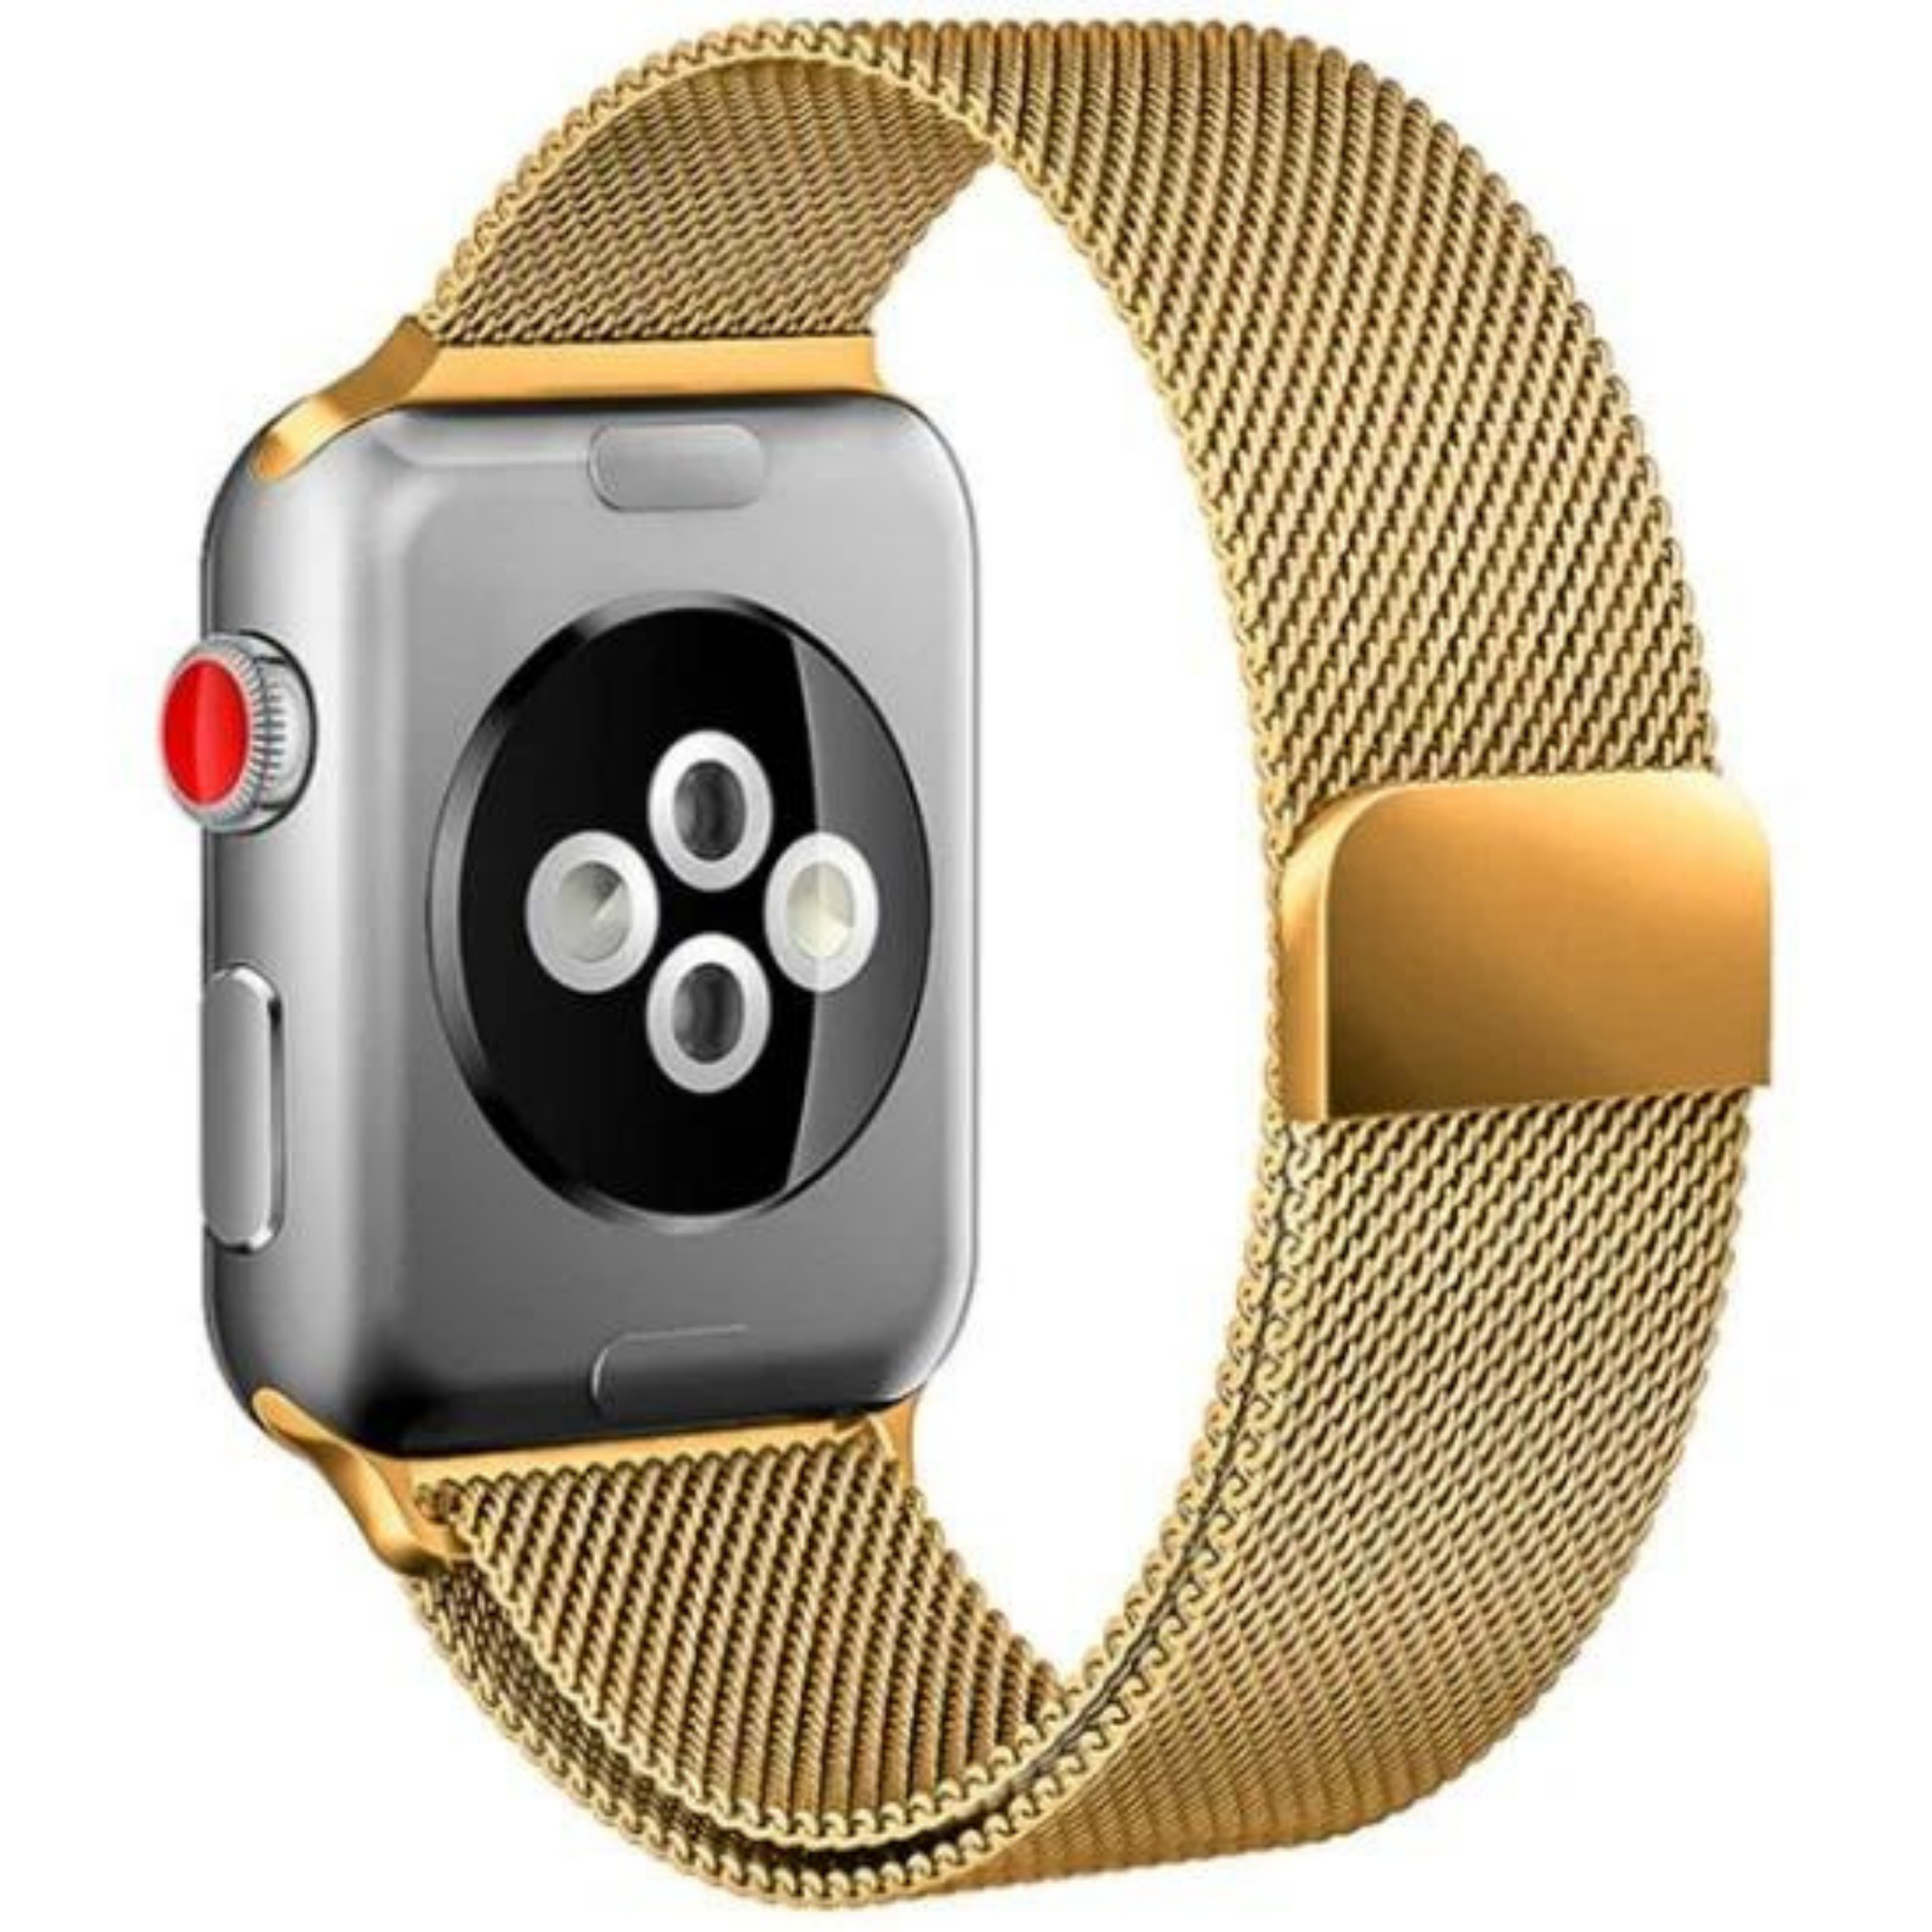 Apple watch 44 мм ремешки. Ремешок для Apple watch 44mm Миланская петля. Эппл вотч se 40мм. Ремешки для АПЛ вотч 7. Эппл вотч с металлическим ремешком.